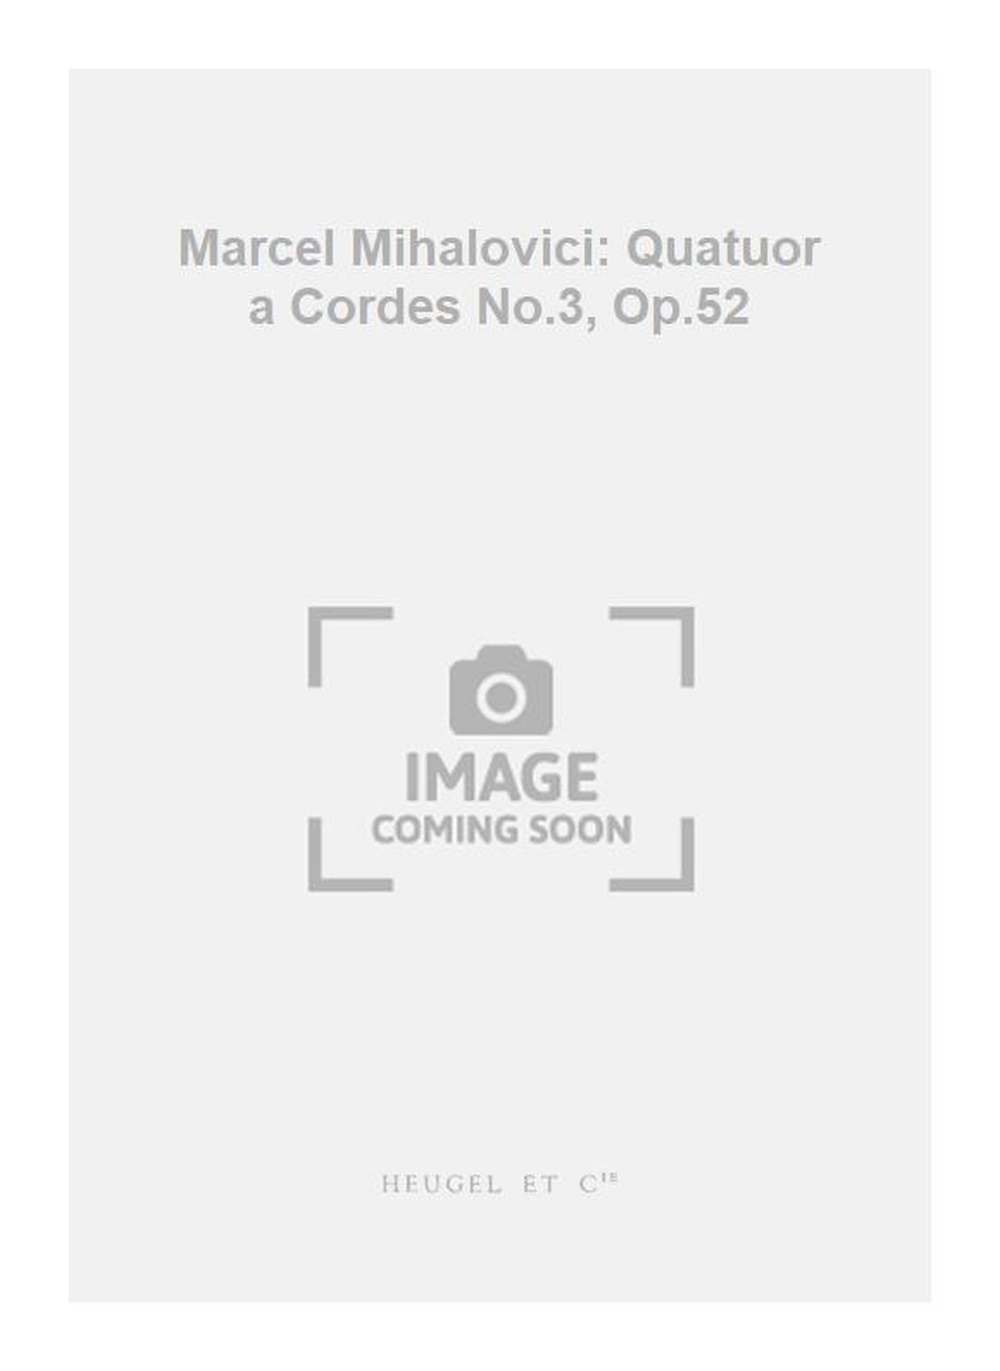 Marcel Mihalovici: Marcel Mihalovici: Quatuor a Cordes No.3  Op.52